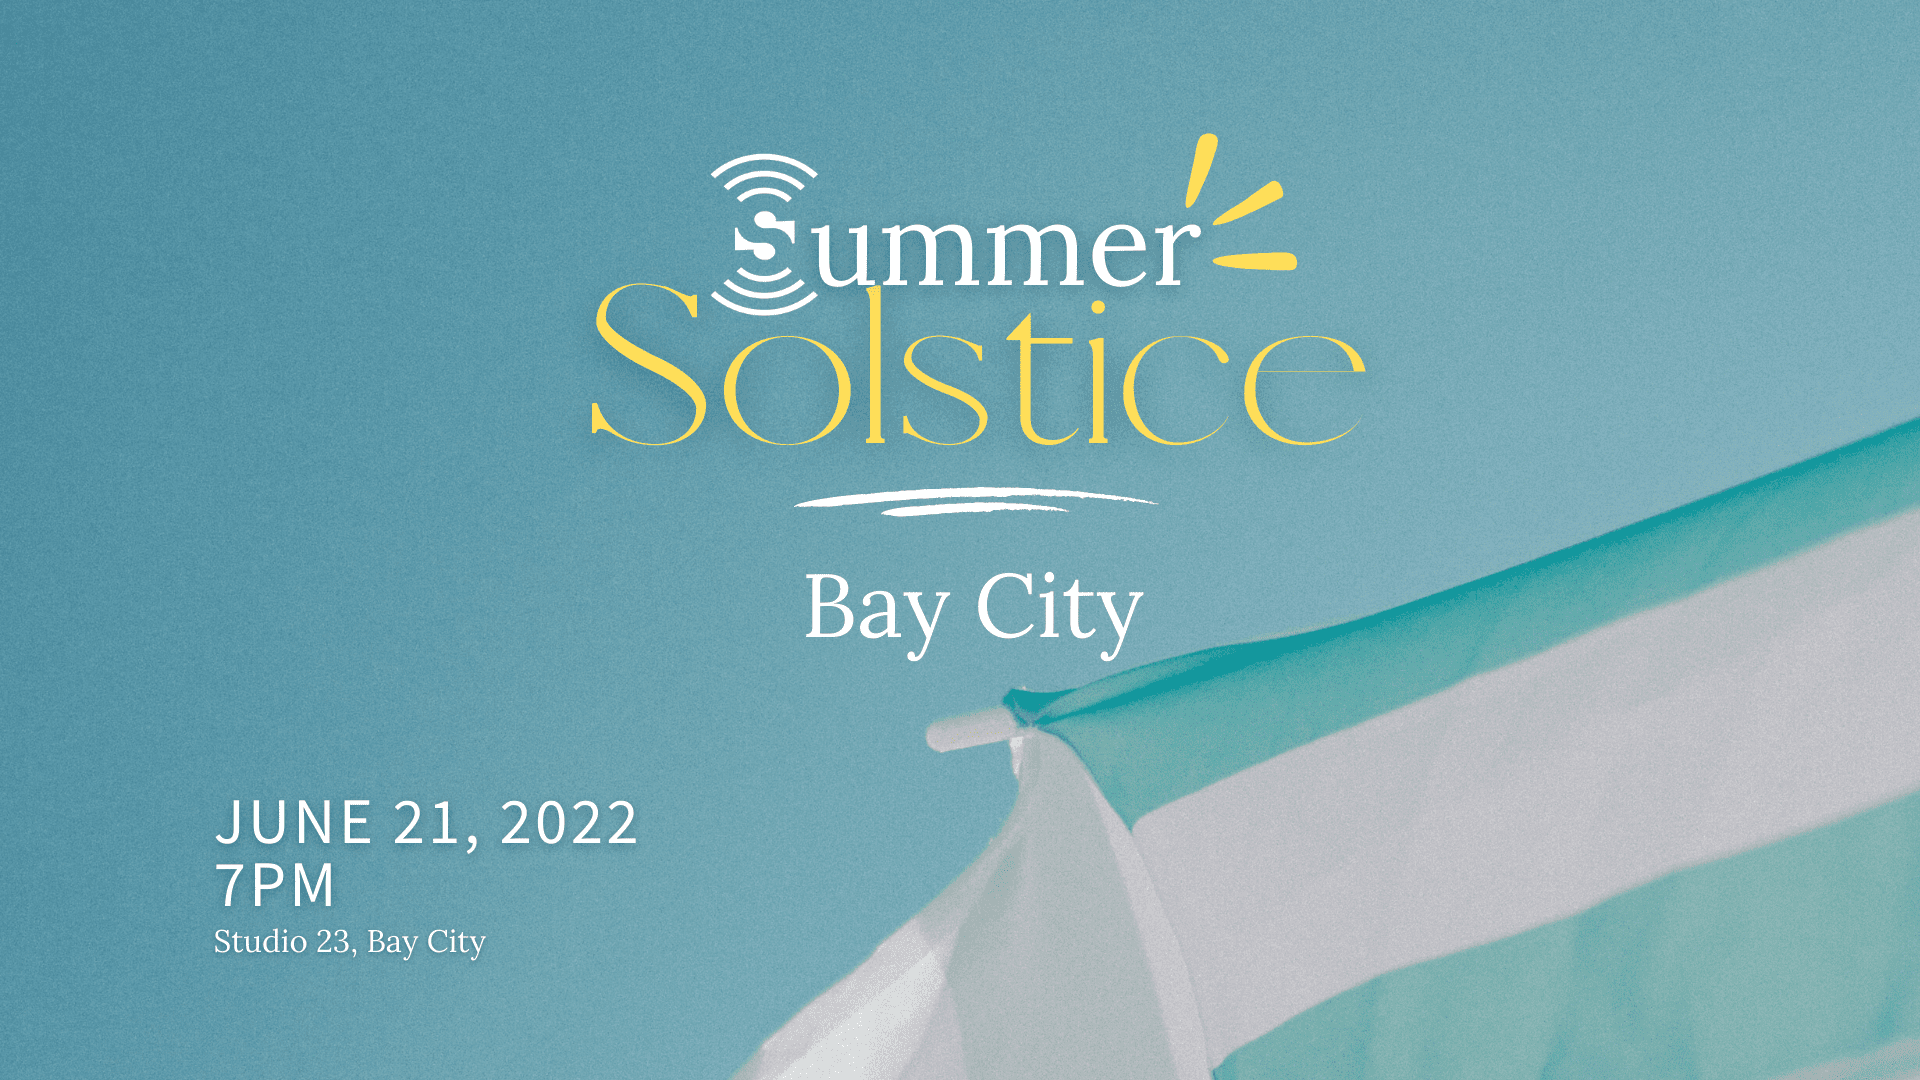 SUMMER SOLSTICE POPUP CONCERT BAY CITY Saginaw Bay Symphony Orchestra